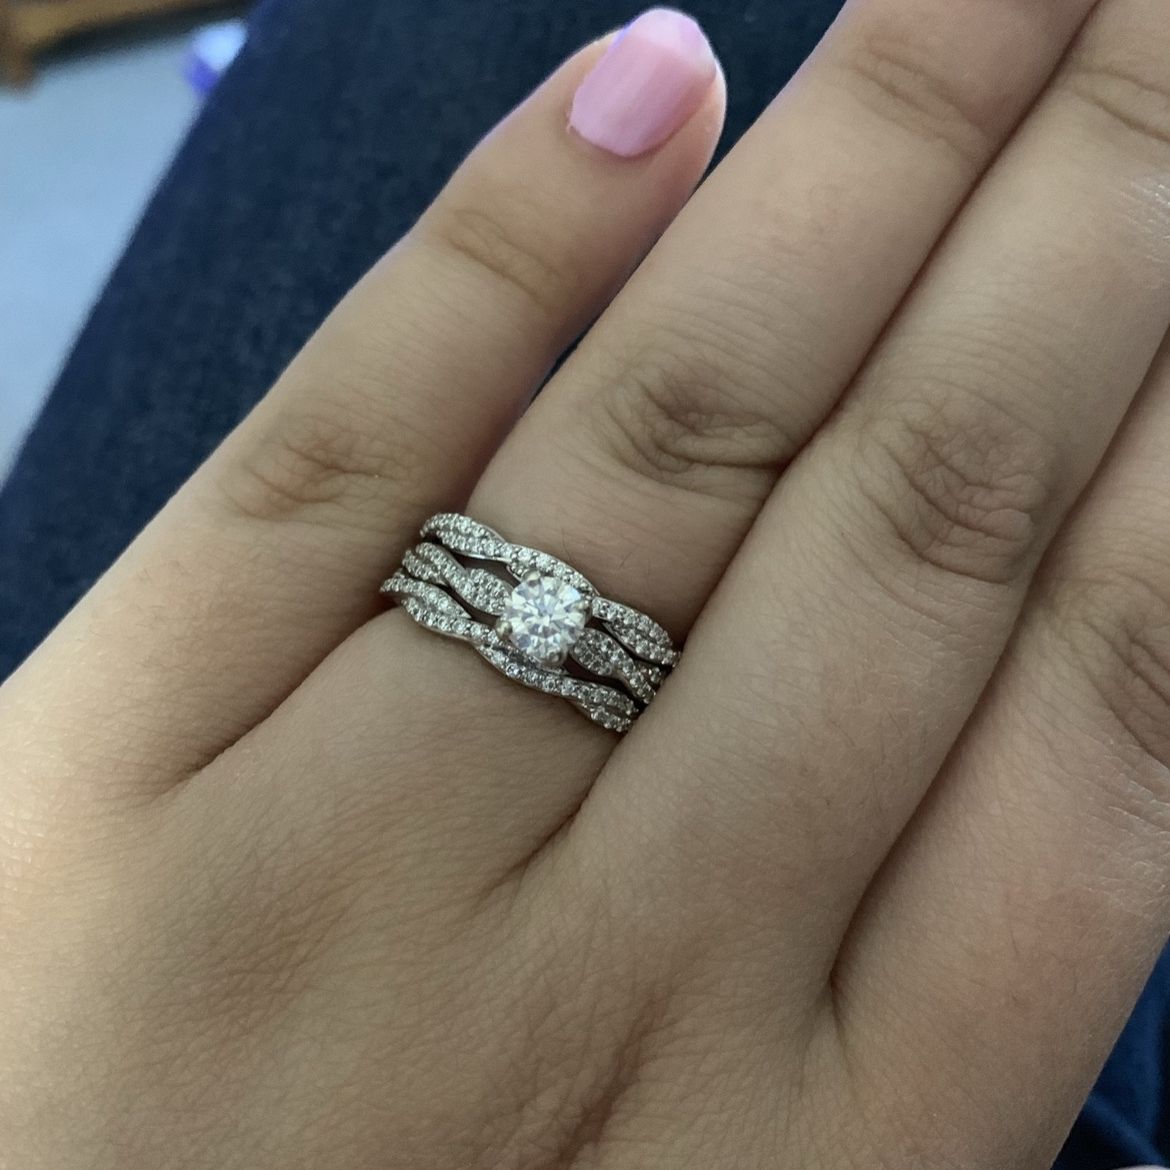 Diamond Engagement Ring Set